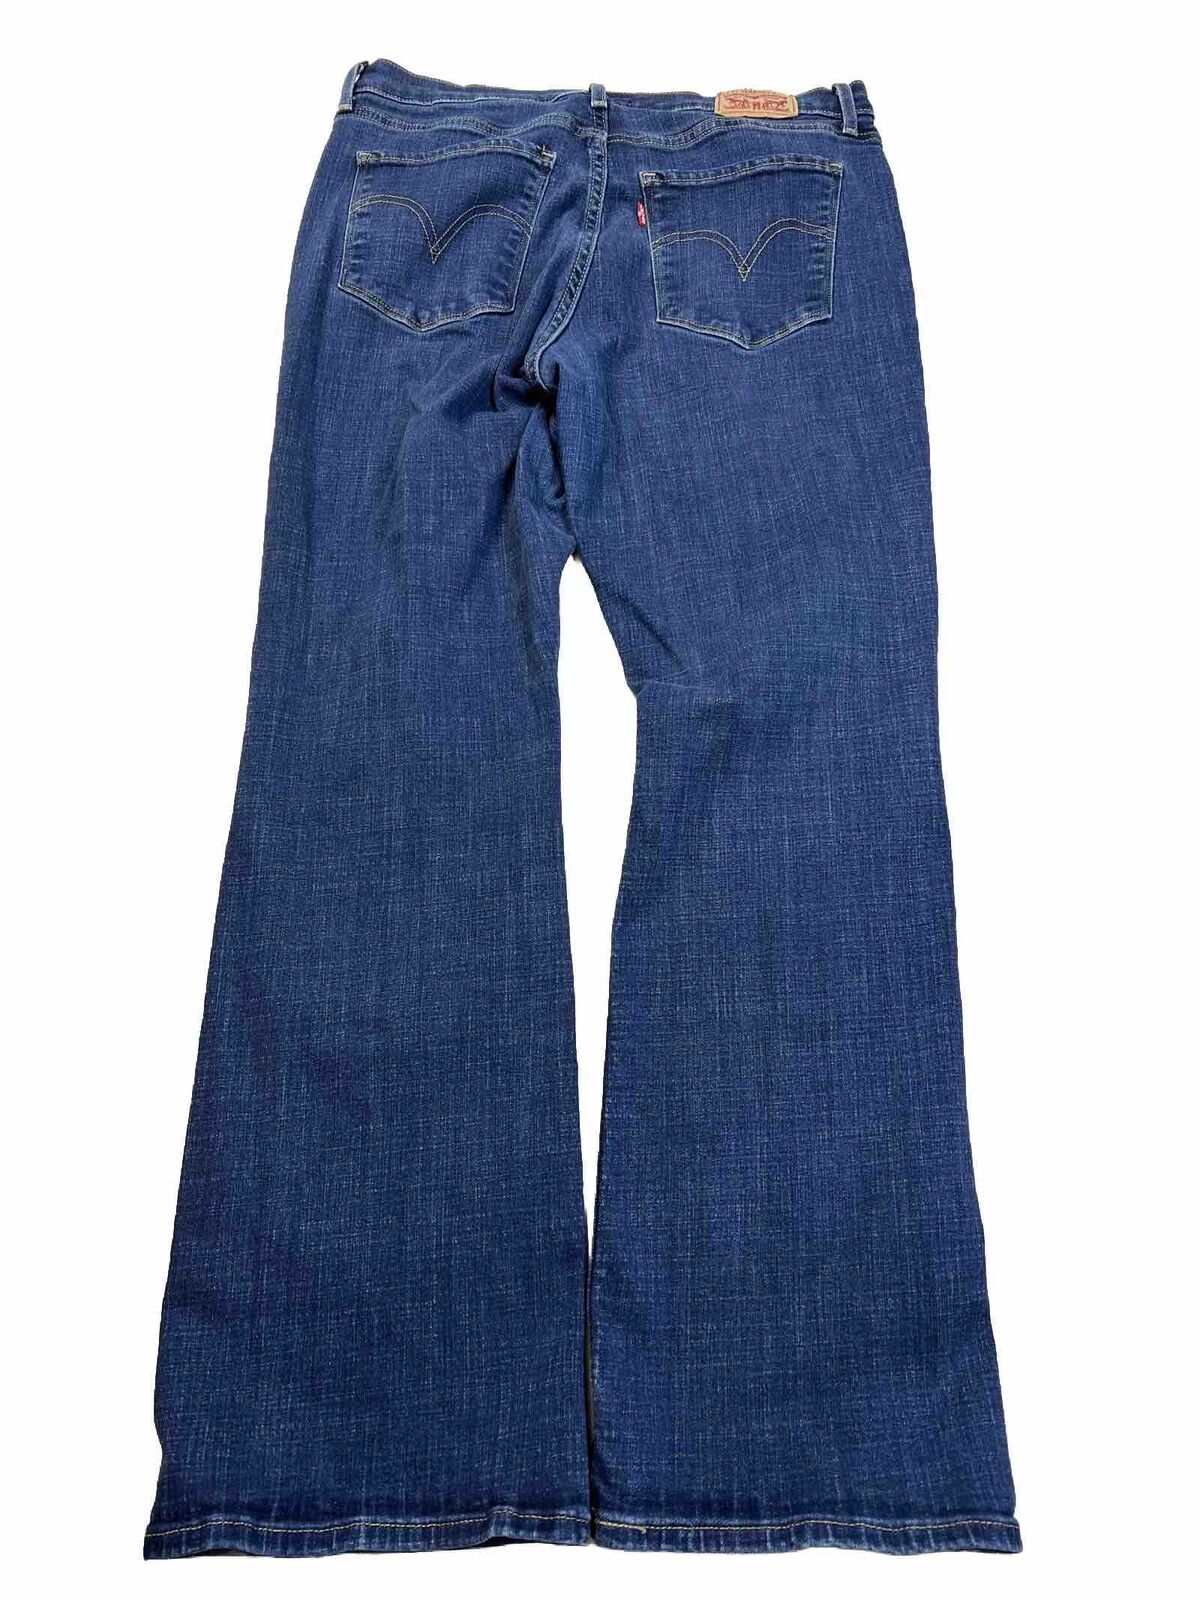 Levi's Women's Dark Wash Classic Bootcut Stretch Jeans - 10